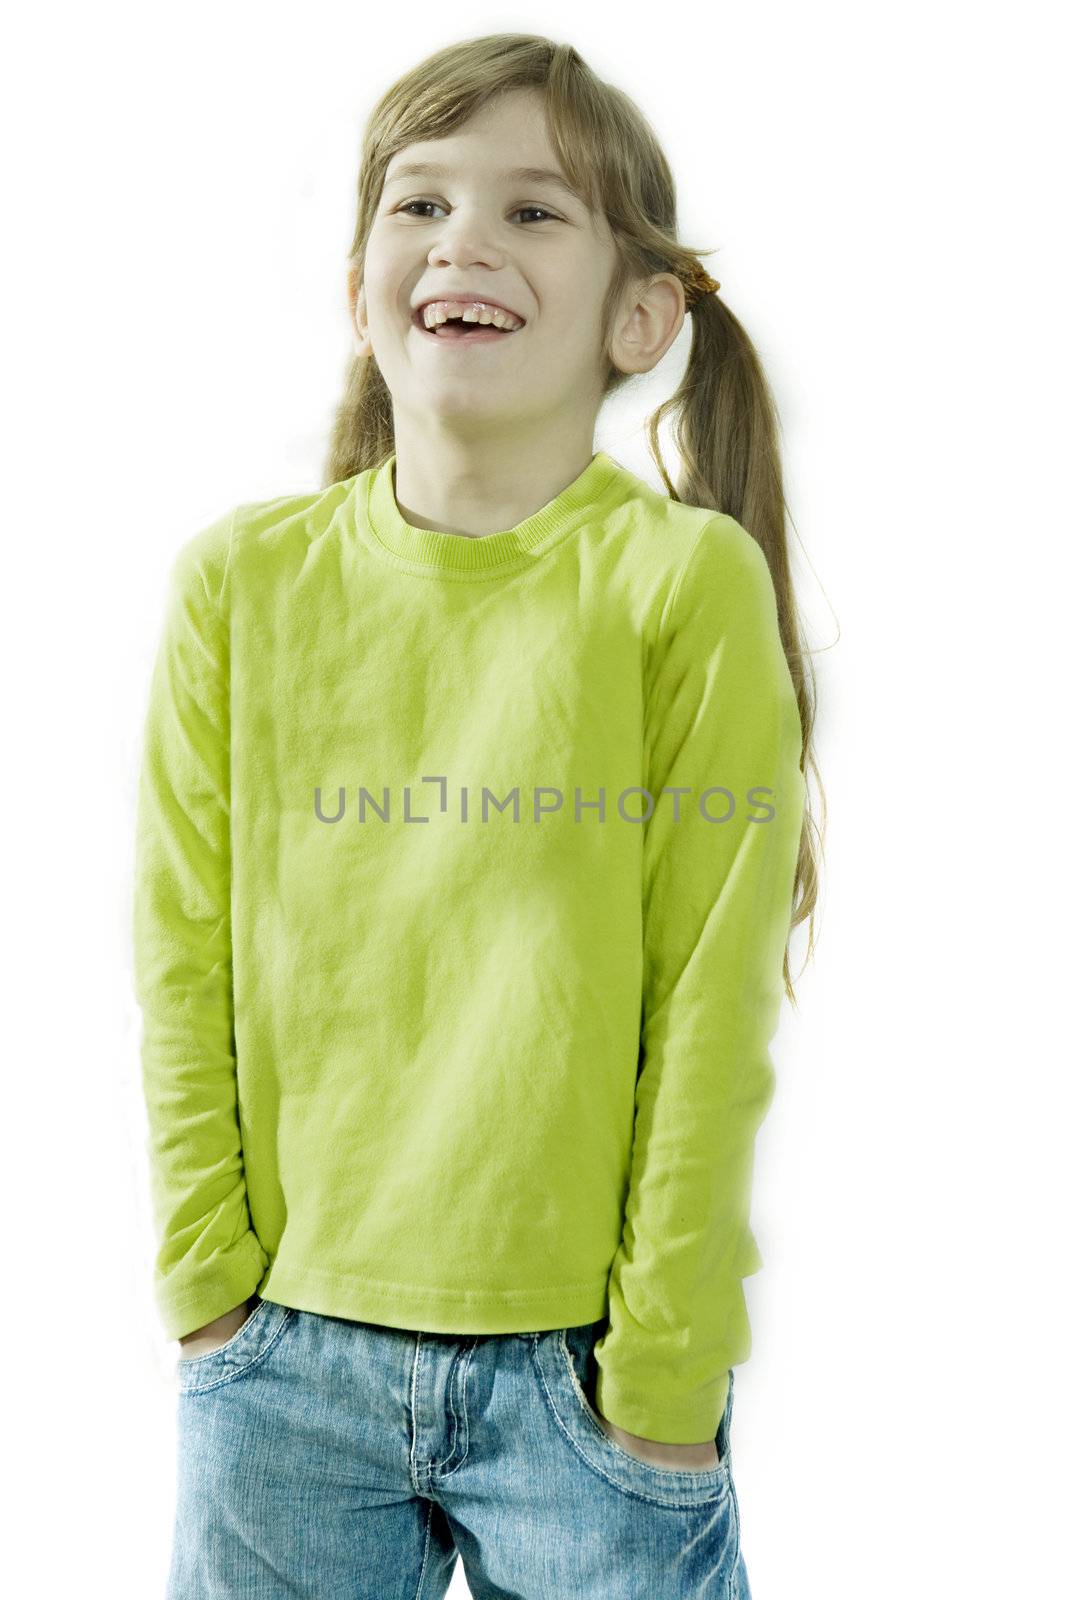 portrait of young smiling girl by elenarostunova